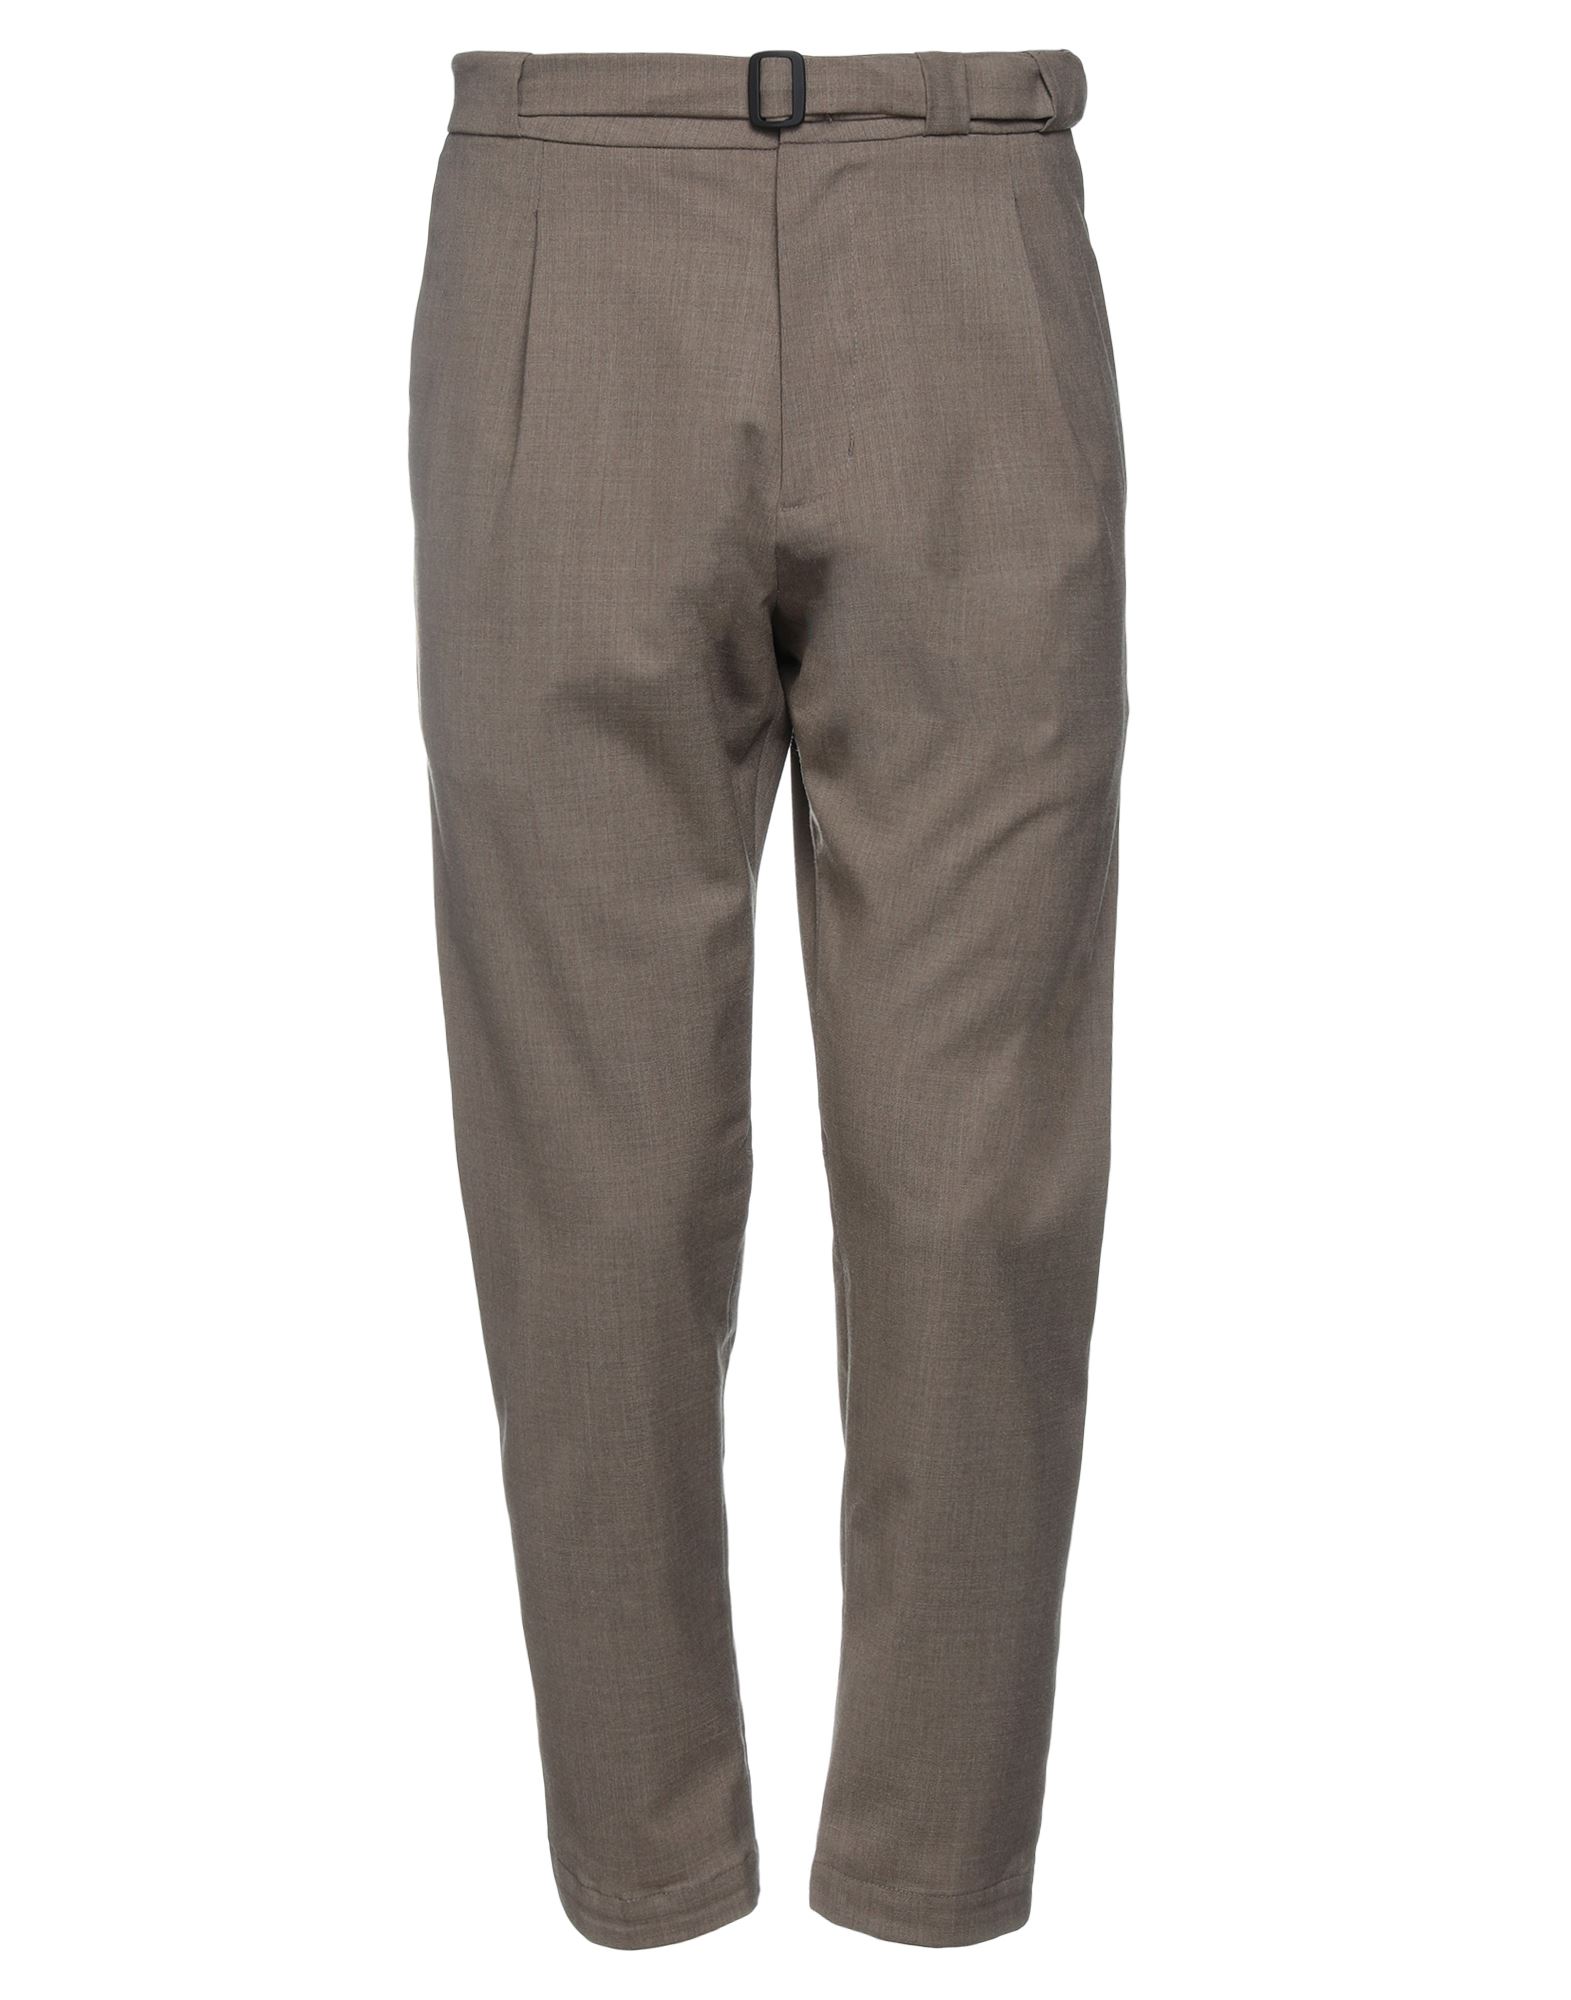 Low Brand Pants In Khaki